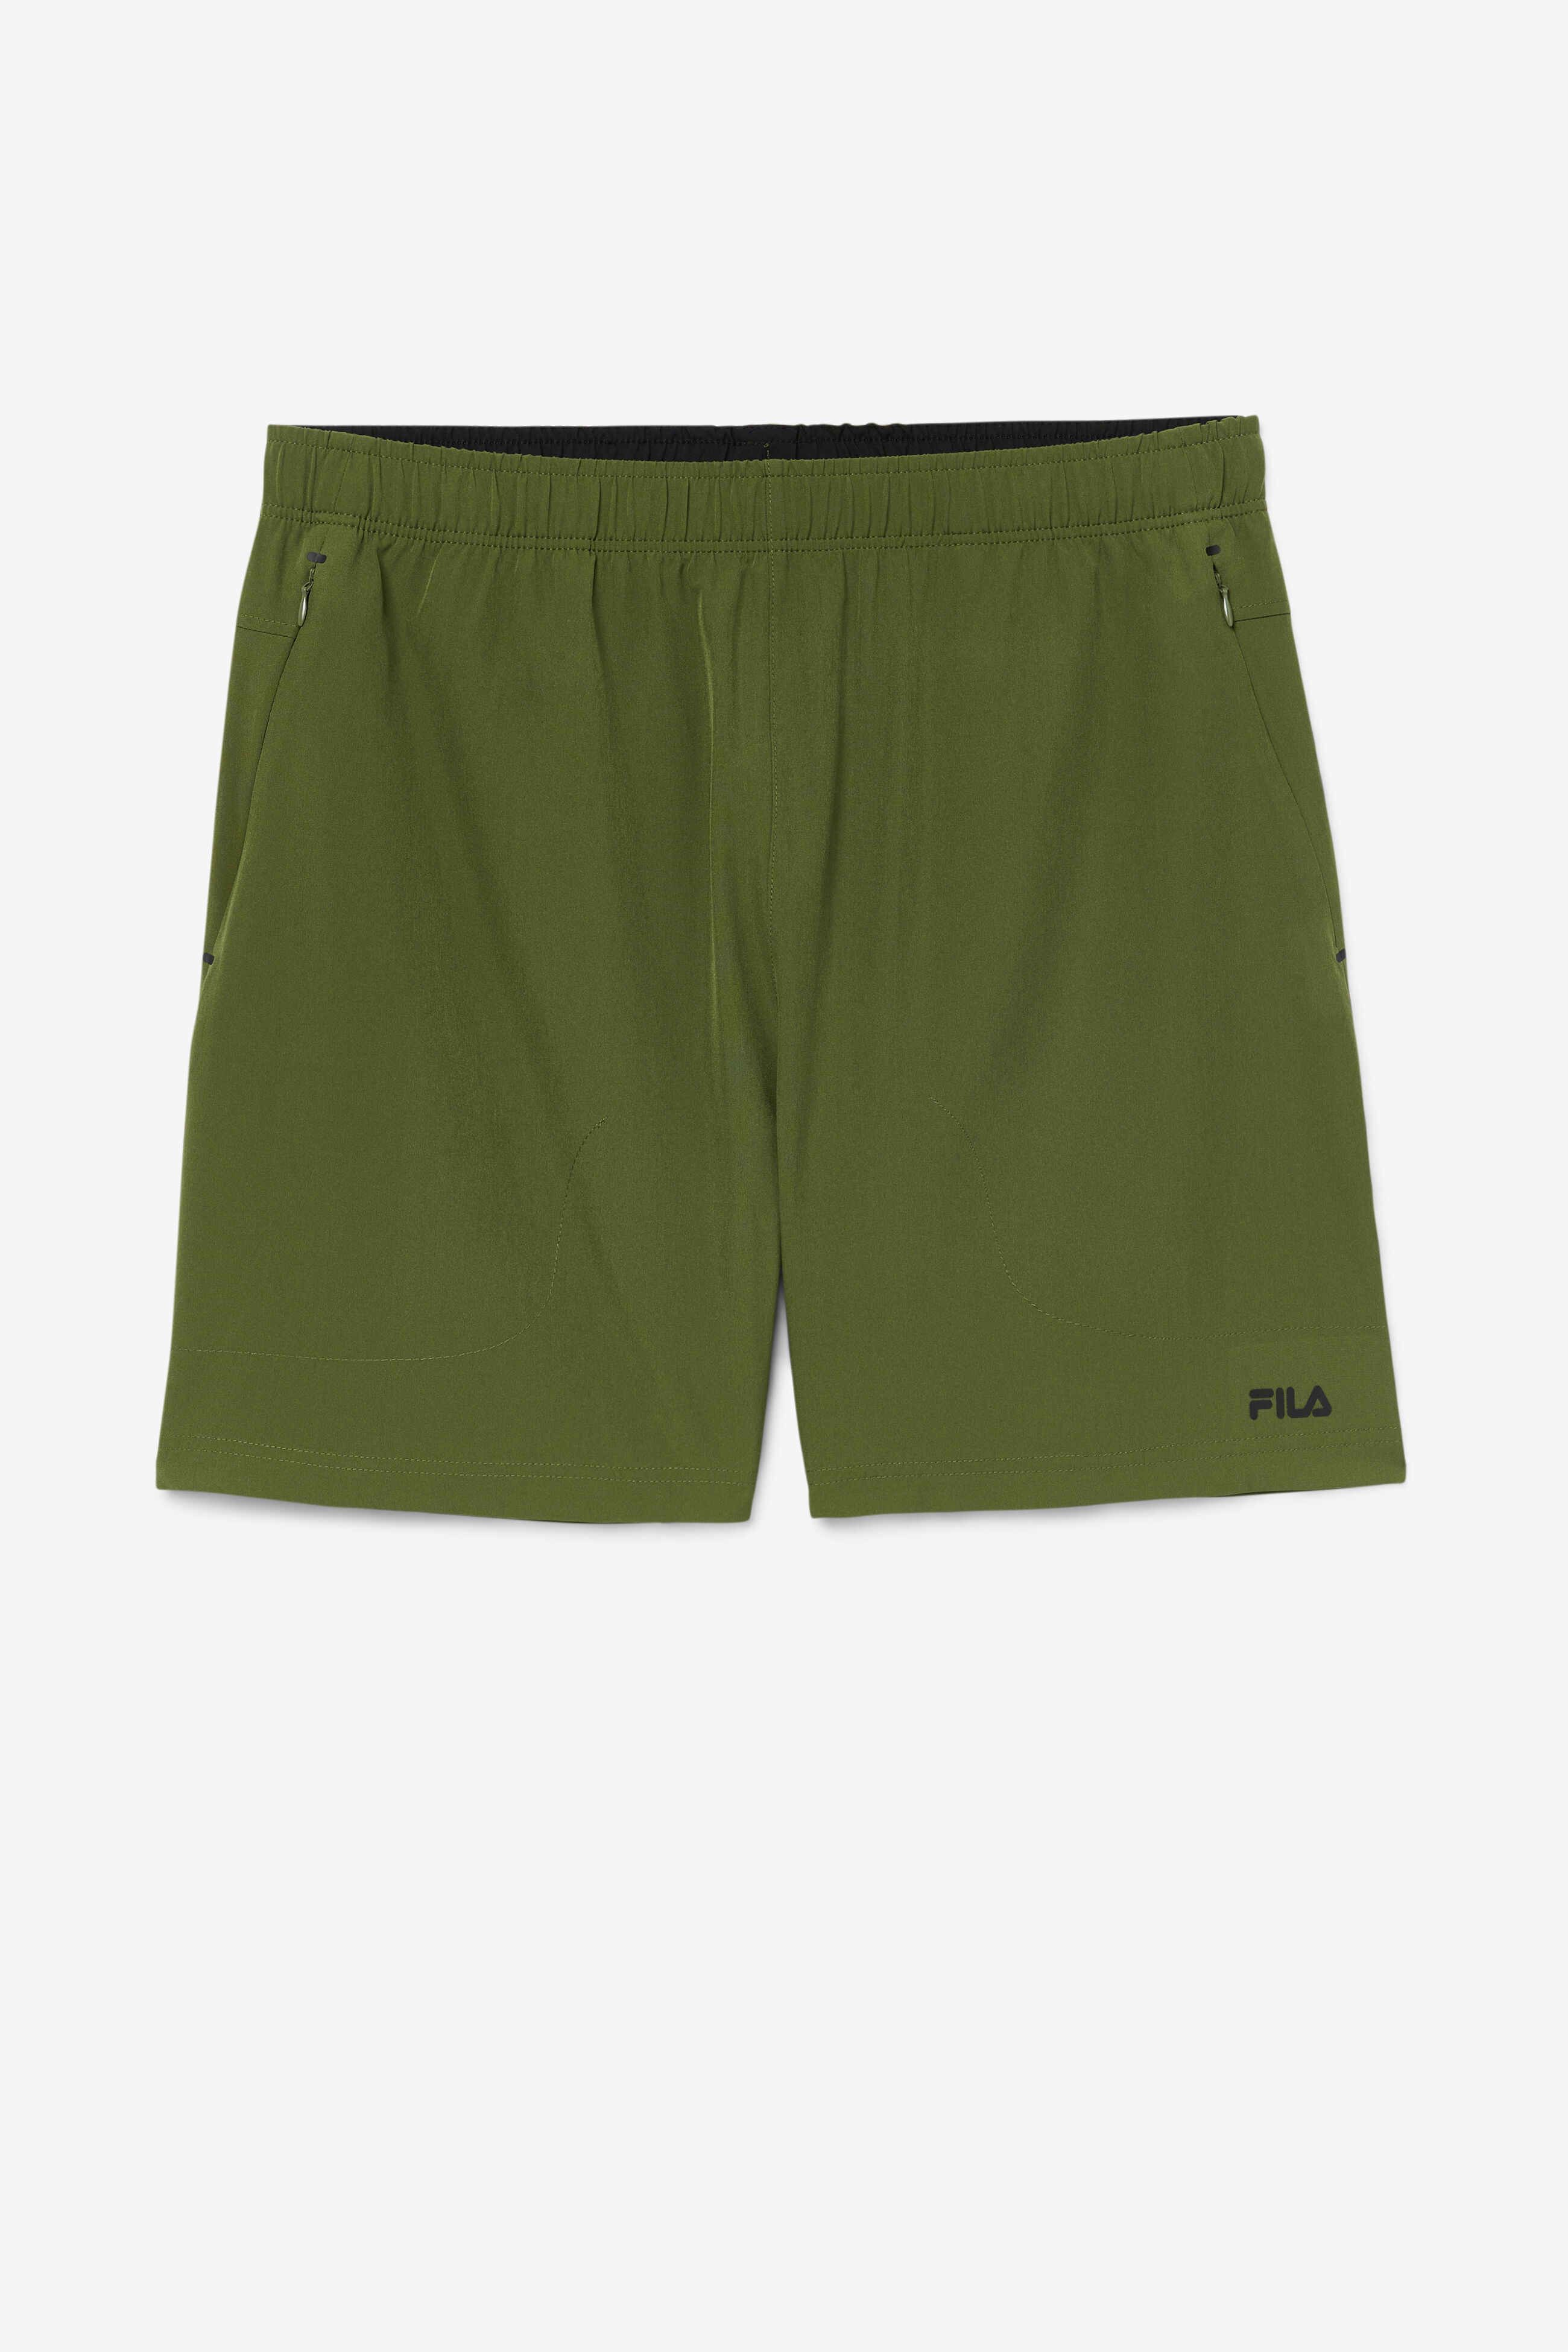 Finula Men's Athletic Shorts With Zipper Pockets | Fila LM13B487